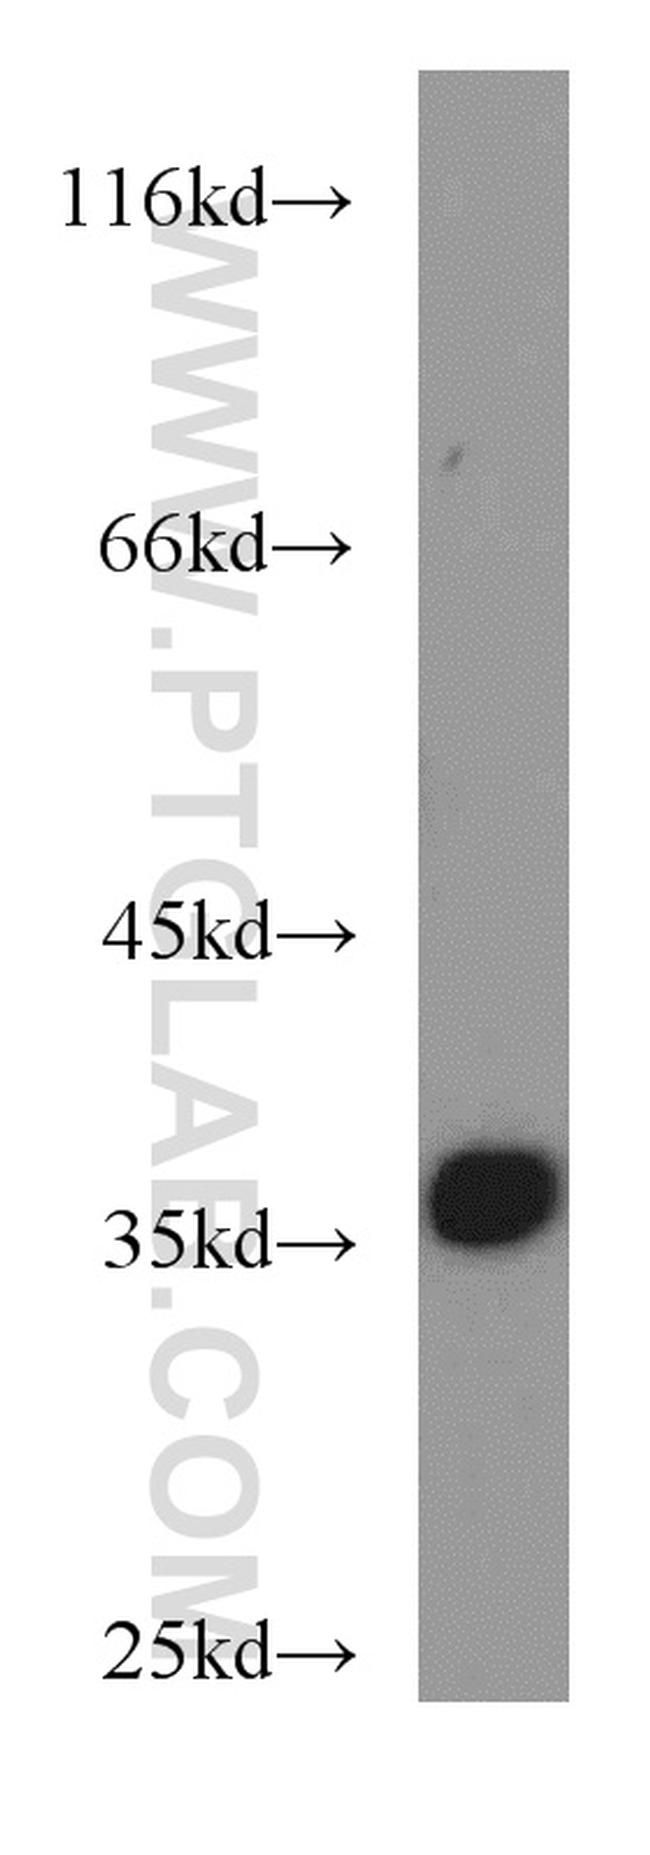 PPP1CC Antibody in Western Blot (WB)